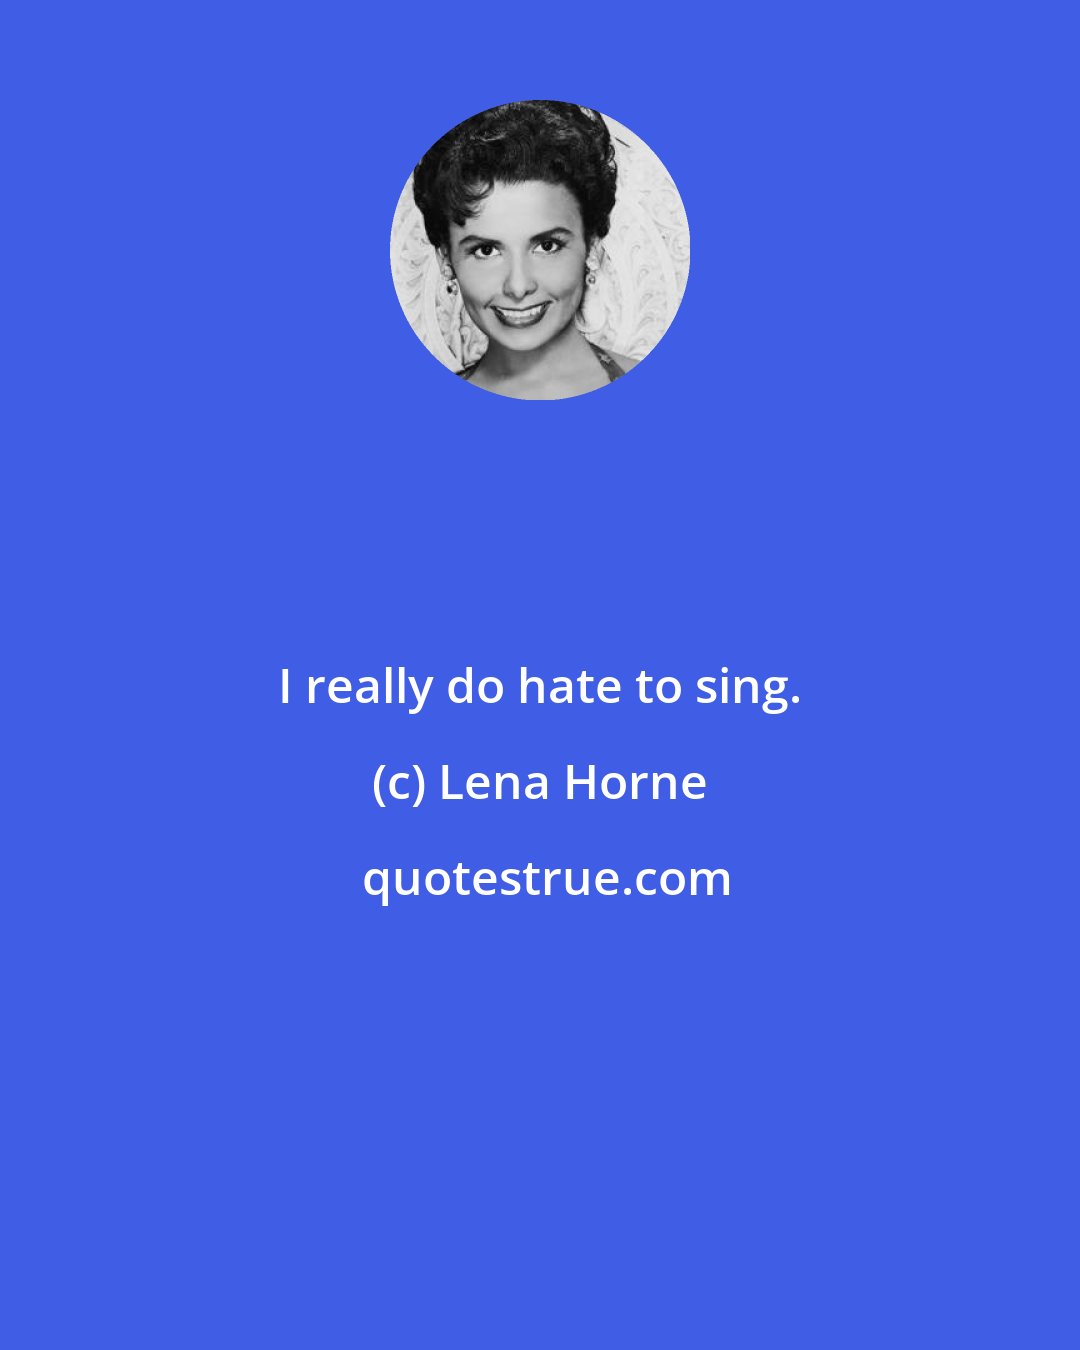 Lena Horne: I really do hate to sing.